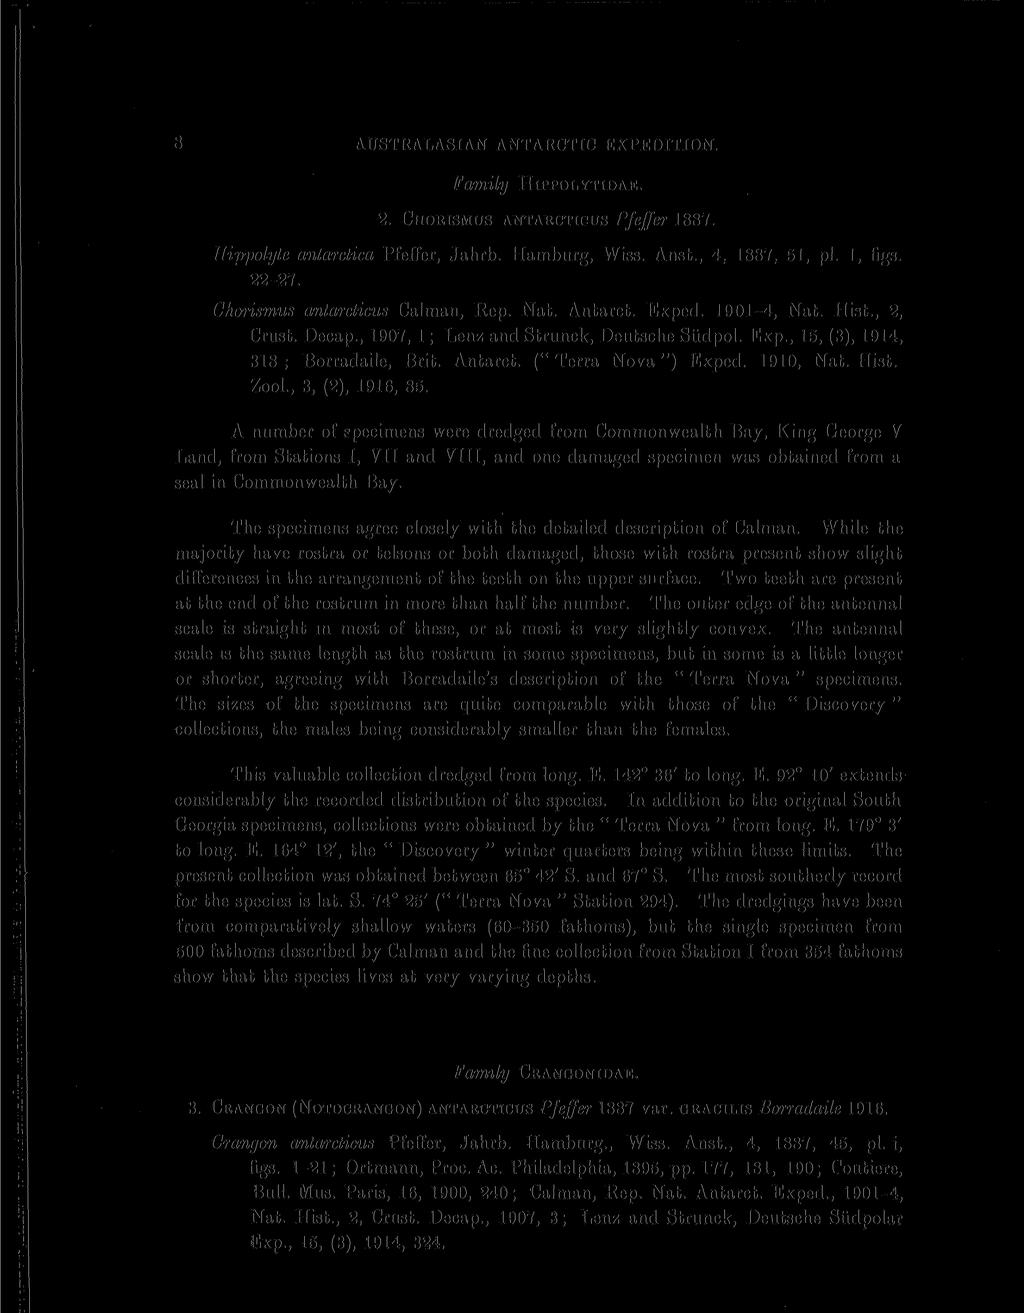 8 AUSTRALASIAN ANTARCTIC EXPEDITION. Family HIPPOLYTIDAE. 2. CHORISMUS ANTARCTICUS Pfeffer 1887. Hijypolyte antarctica Pfeffer, Jahrb. Hamburg, Wiss. Anst., 4, 1887. 51, pi. 1, figs. 22-27.